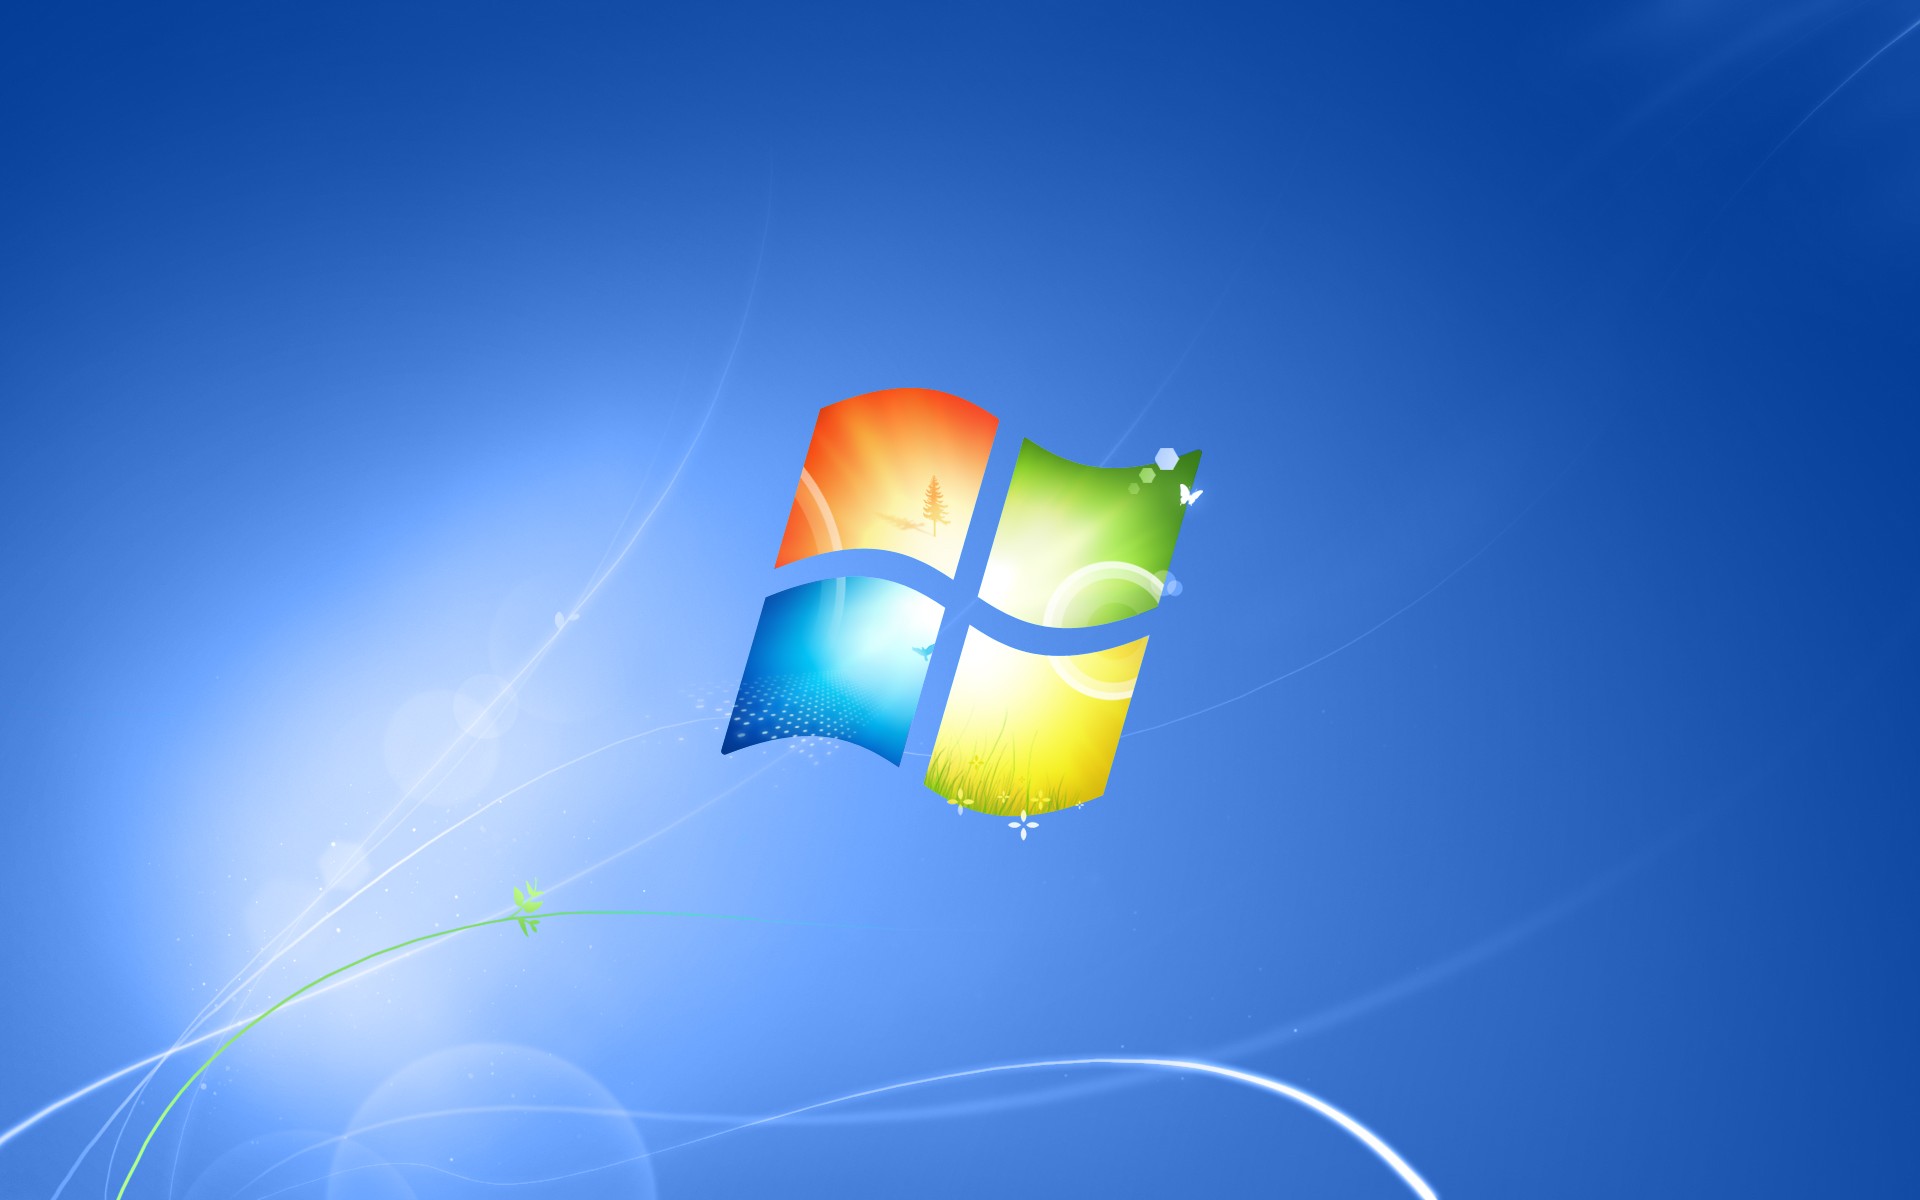 windows 10 lost files on desktop